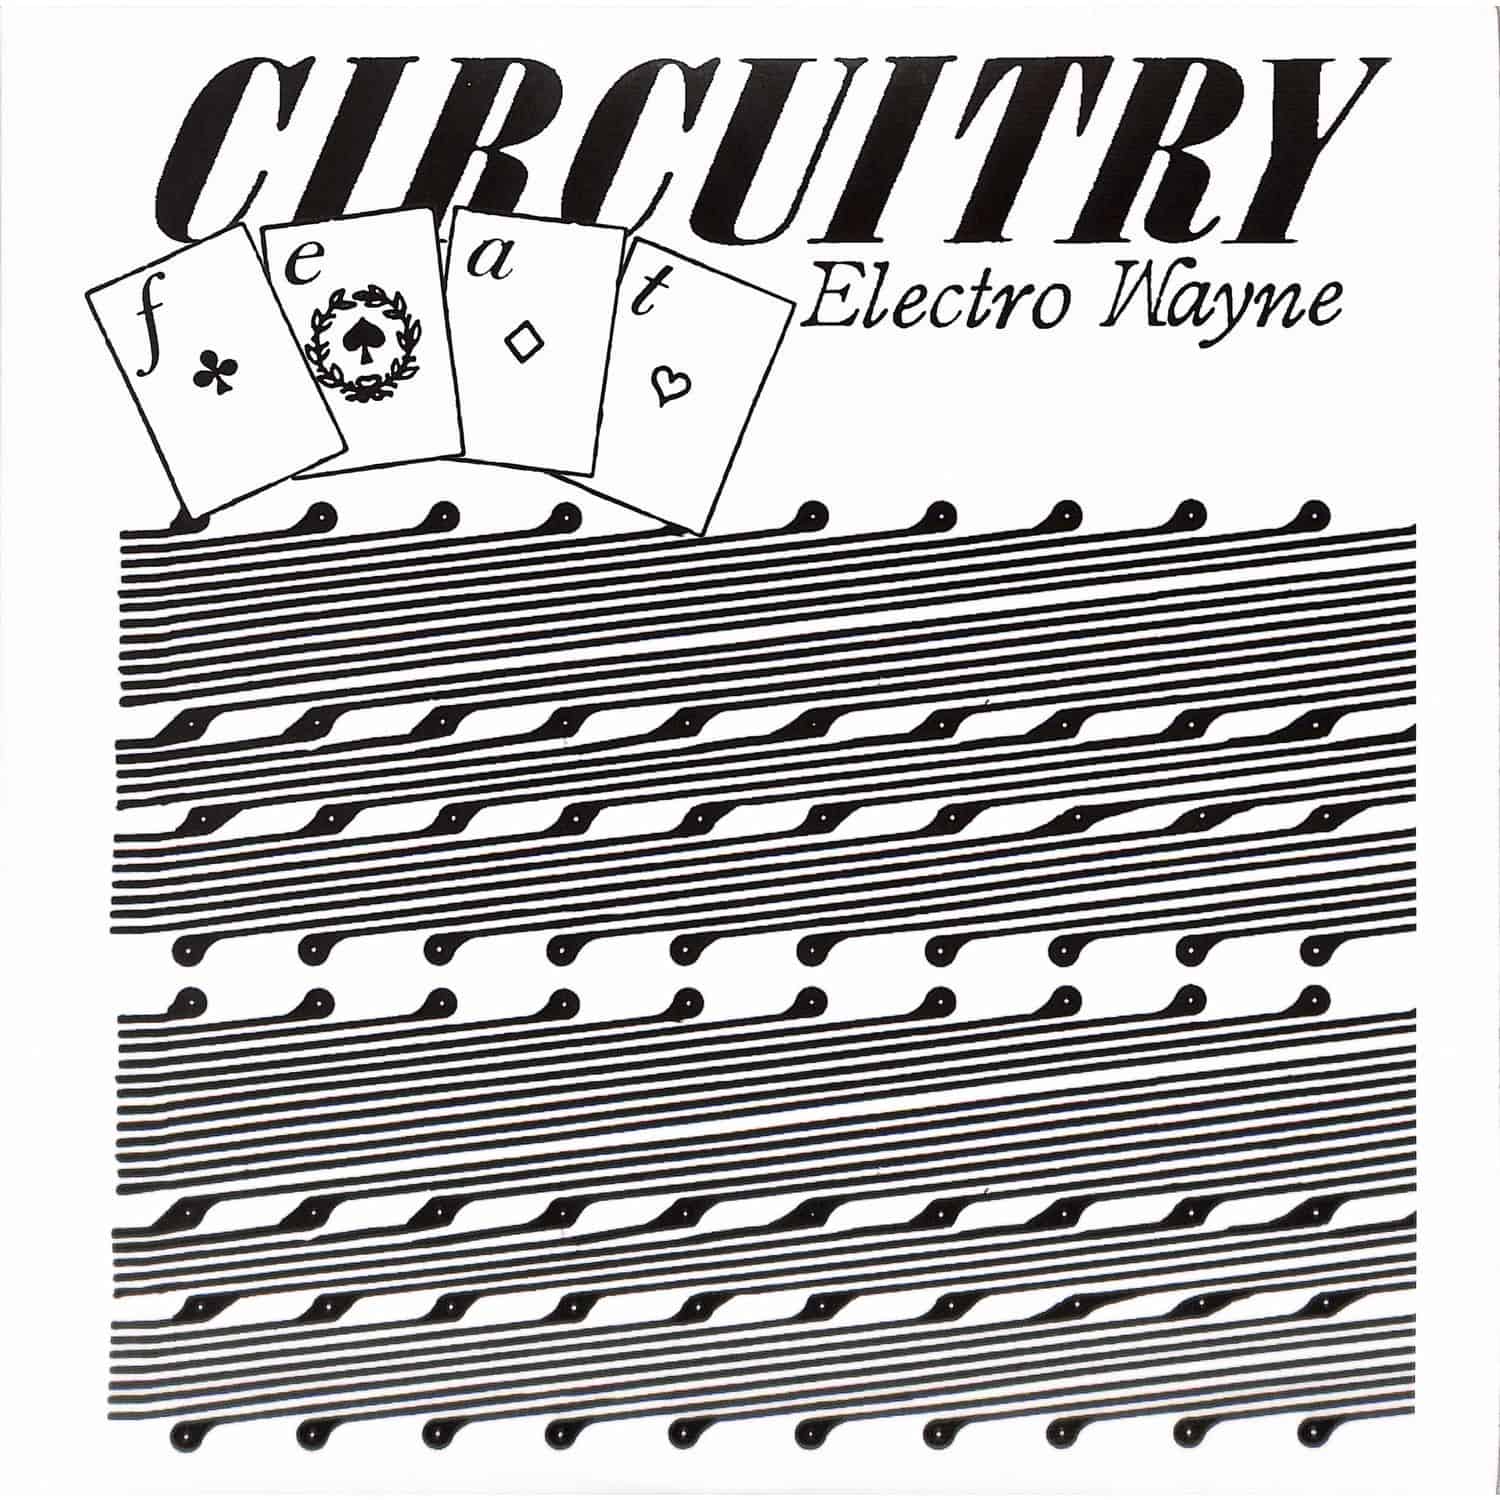 Circuitry feat Electro Wayne - SEXY BODY VOLUME III